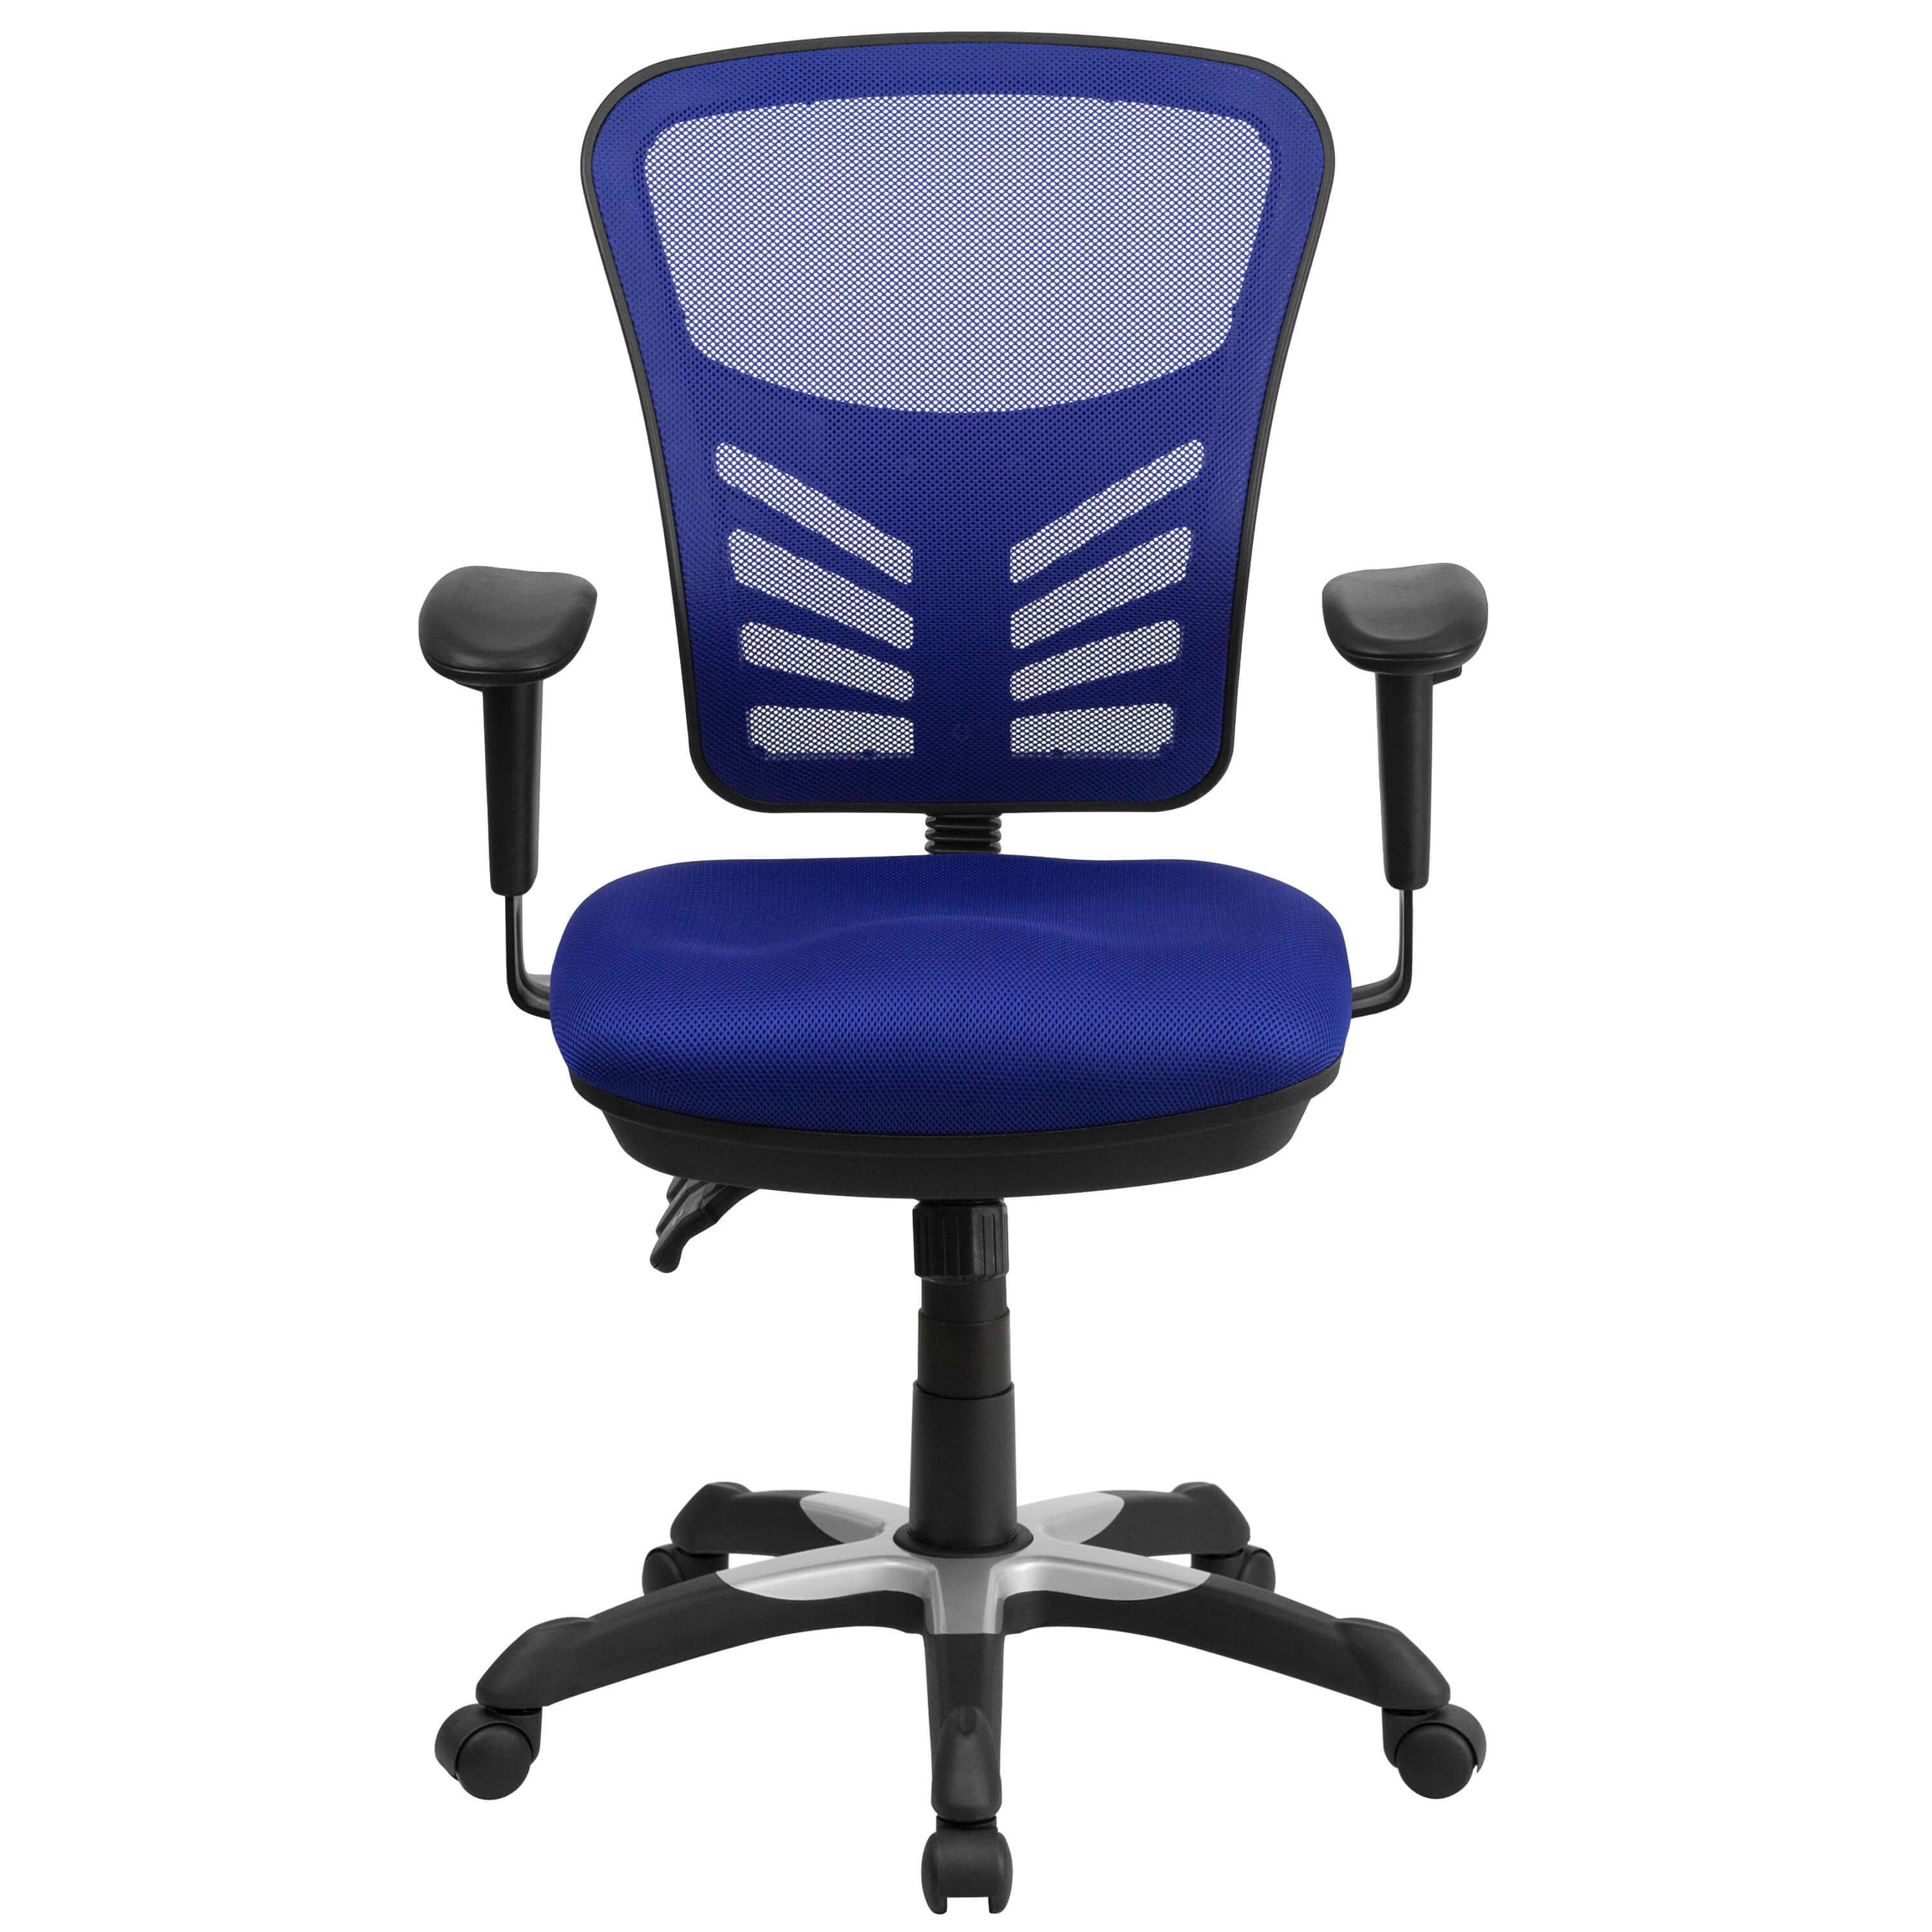 Colorful desk chairs CUB HL 0001 BL GG FLA